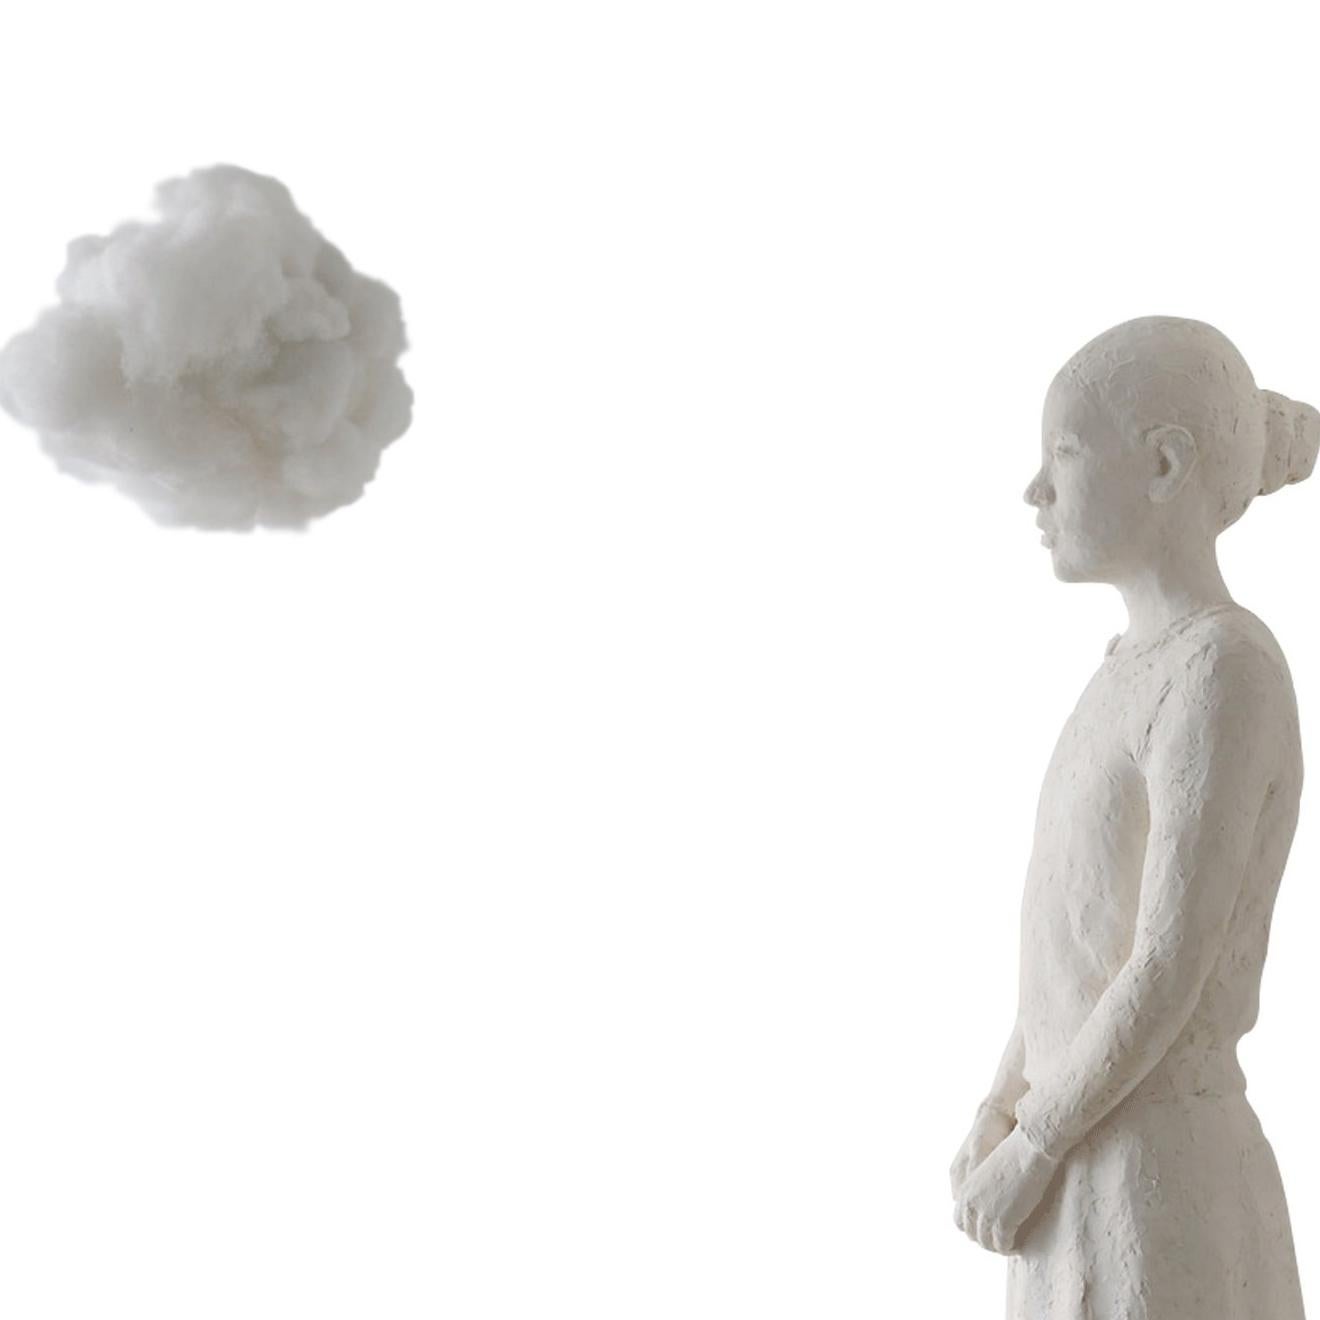 The Cloud - Sculpture by Isabelle Corniere